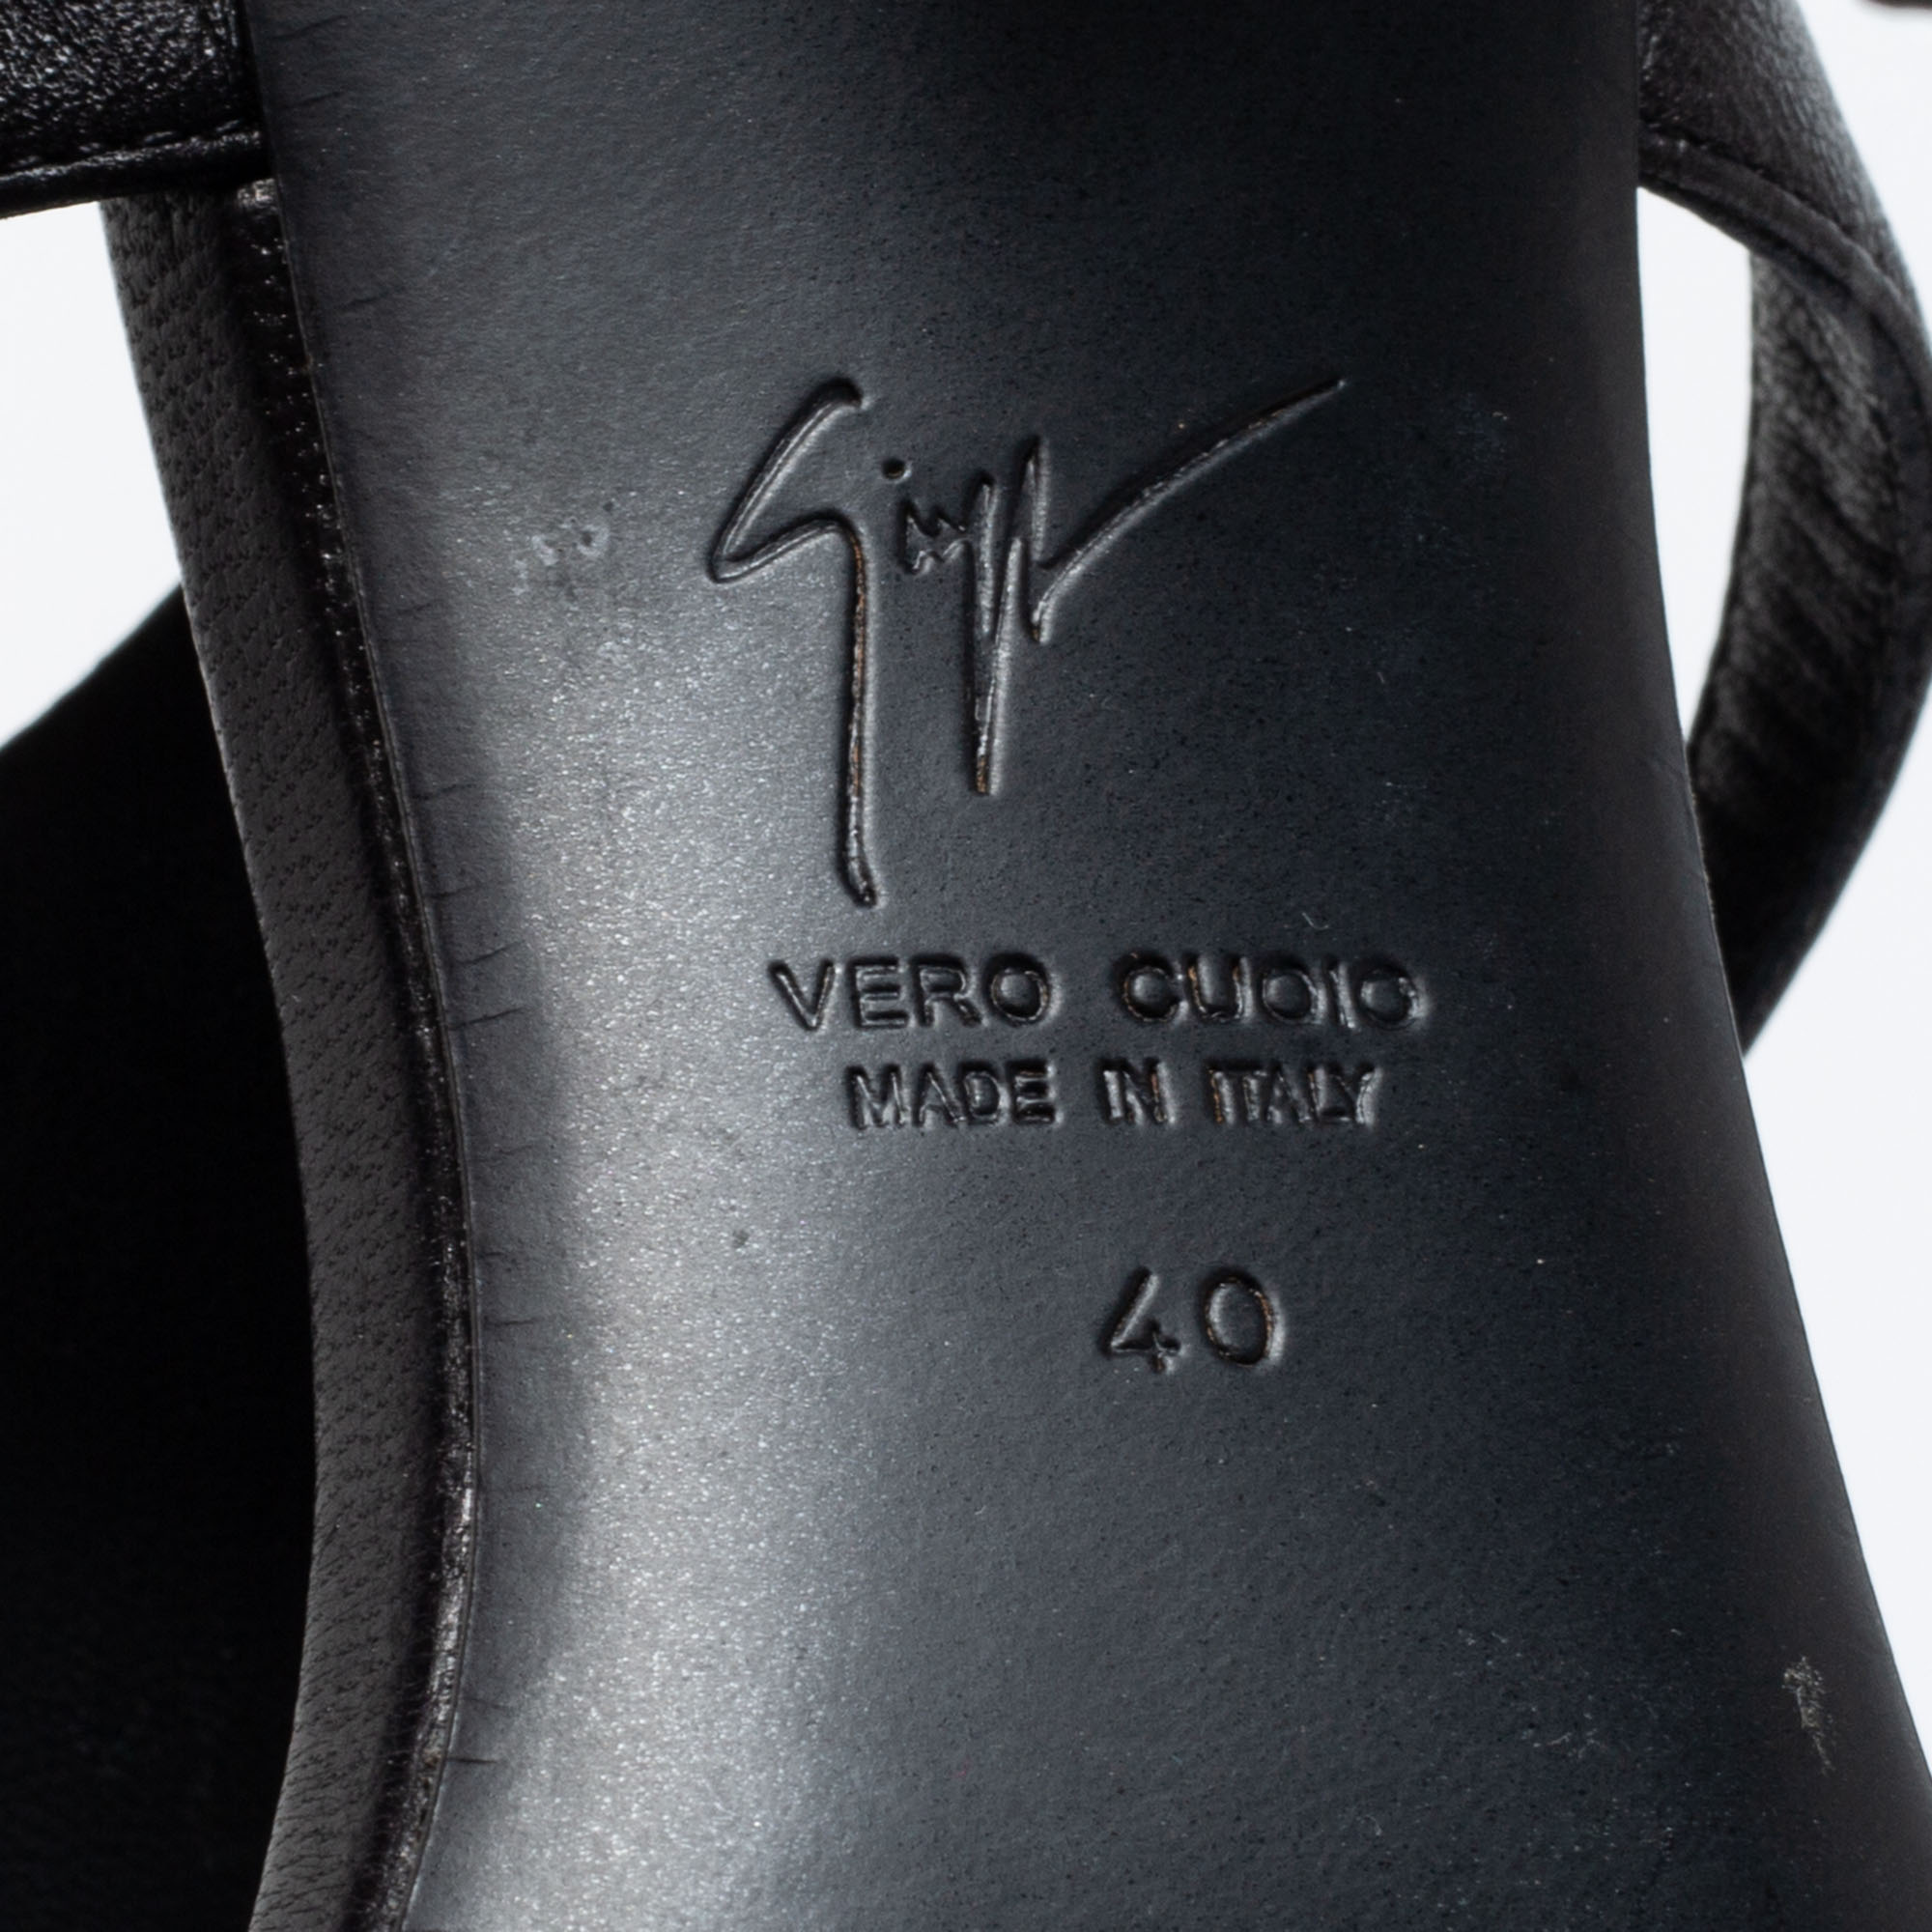 Giuseppe Zanotti Black Leather T-Strap Sandals Size 40